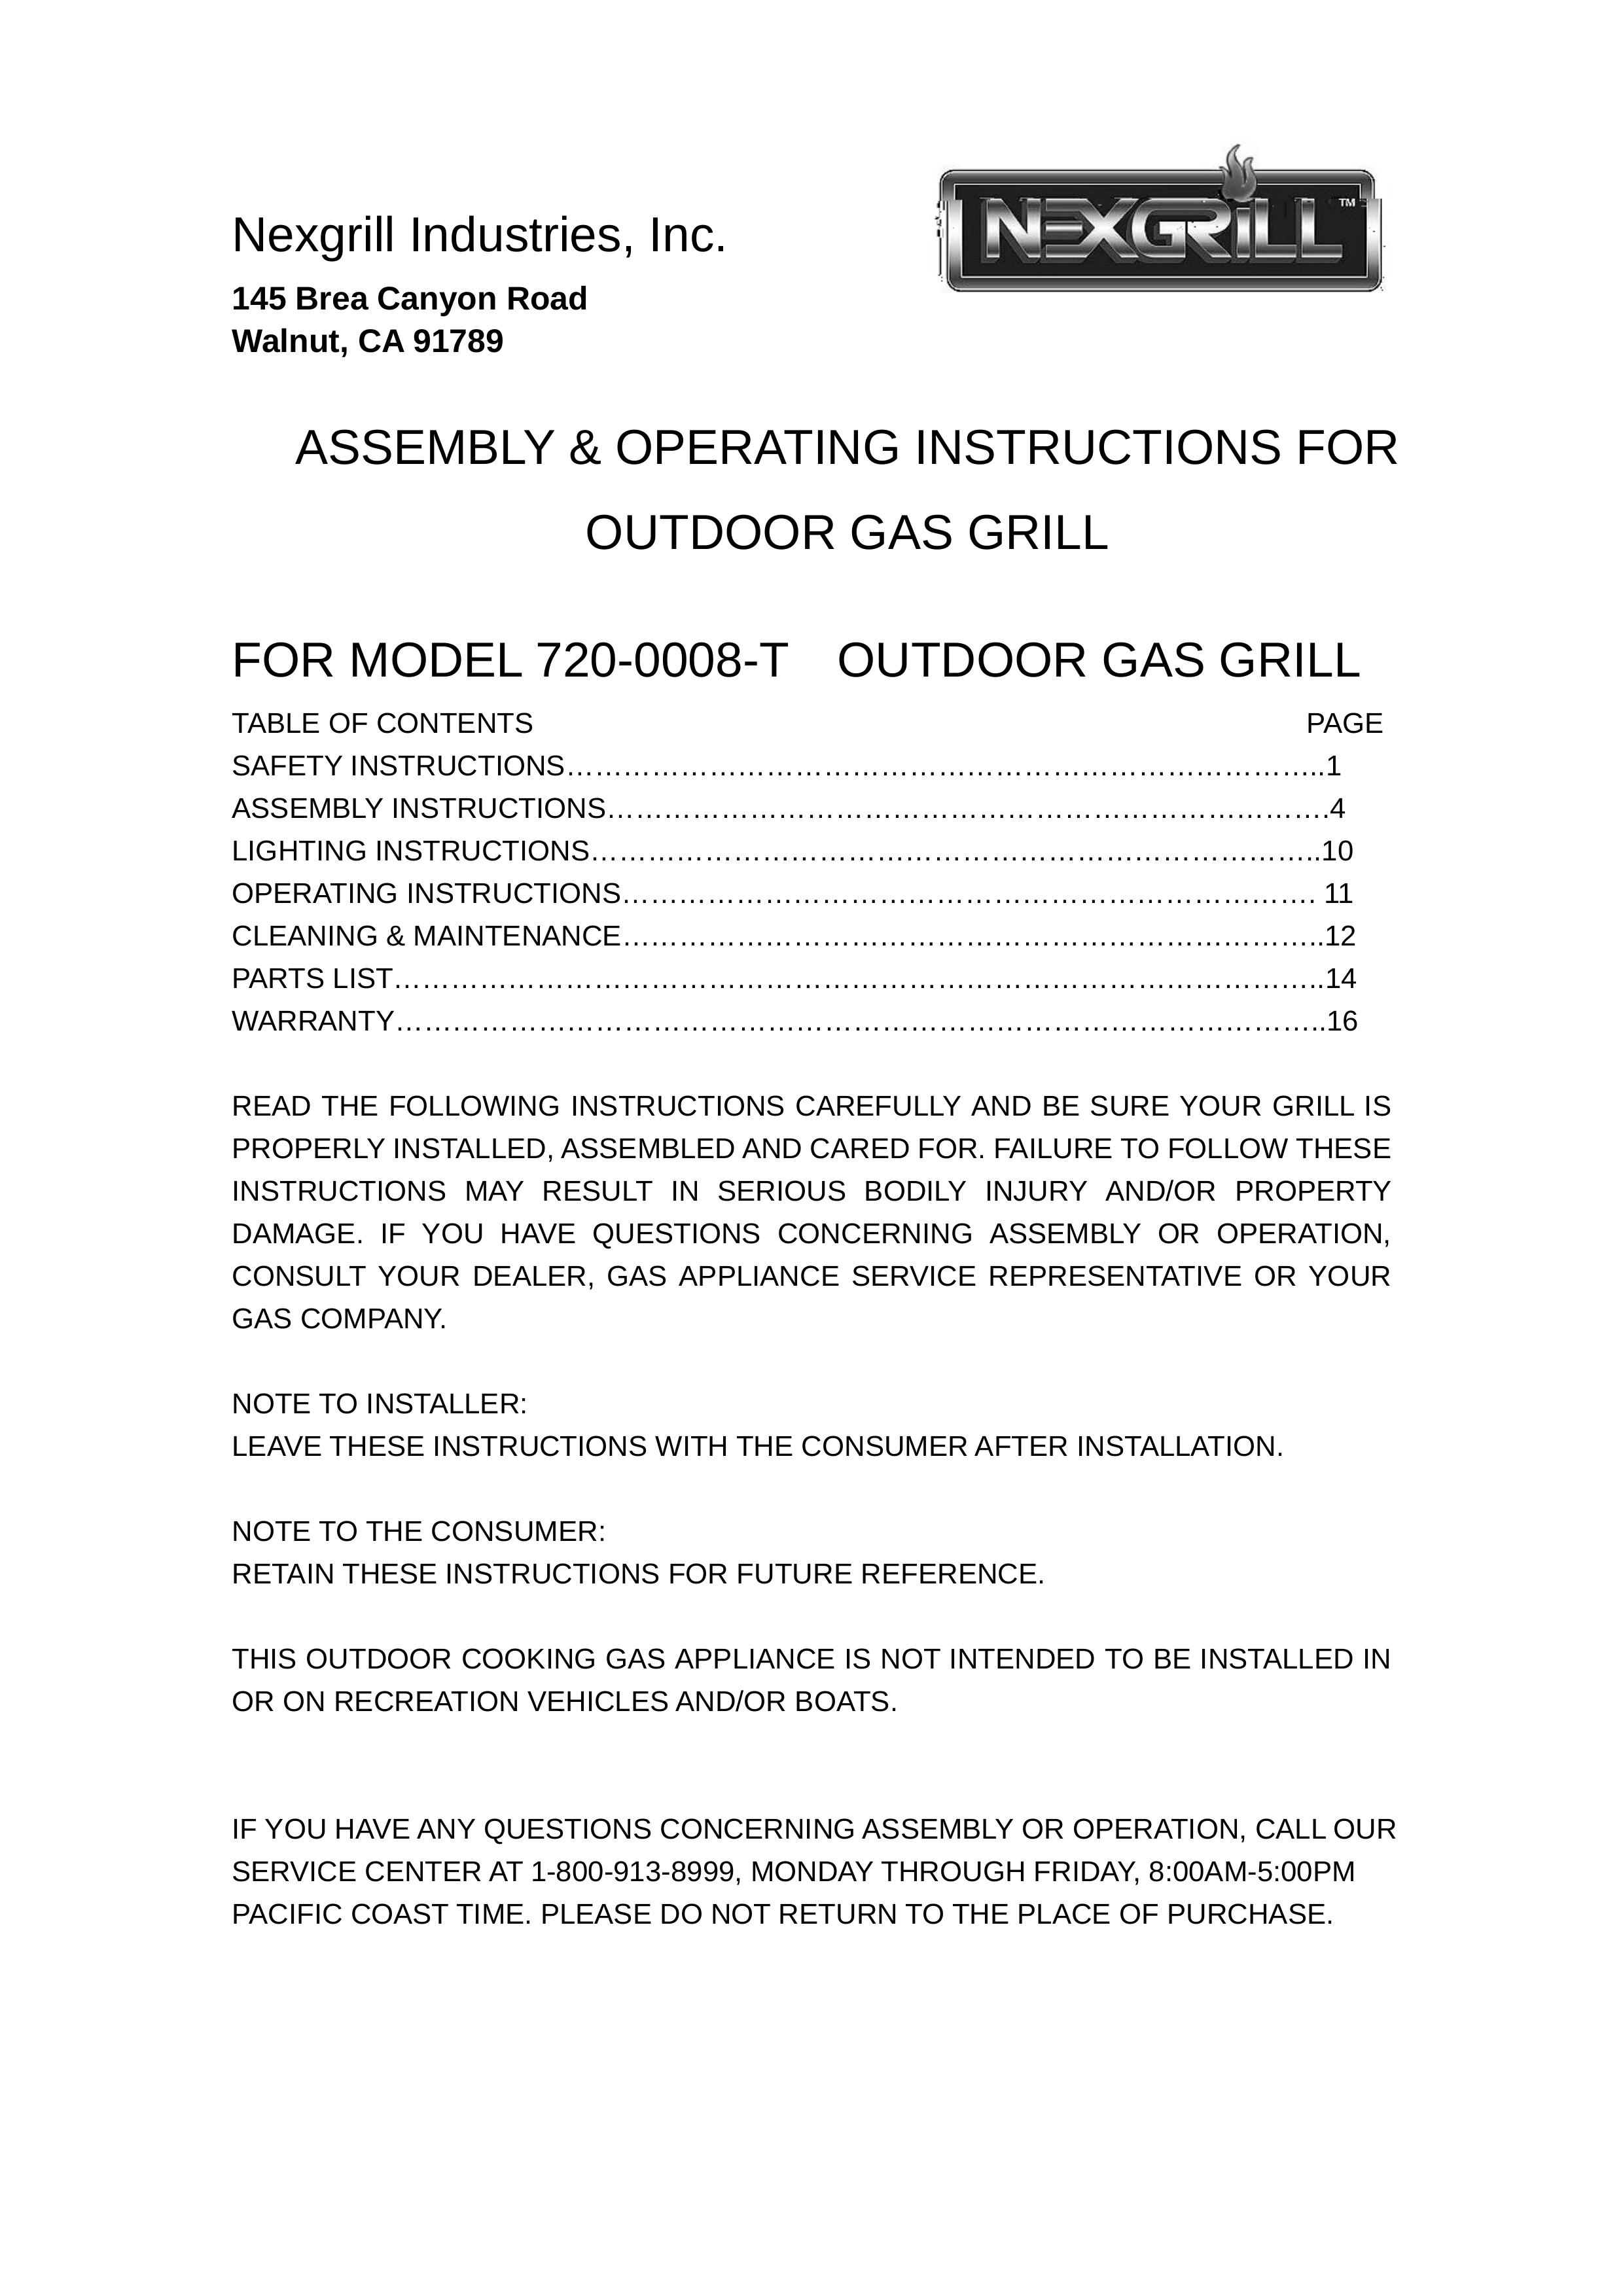 Nexgrill 720-0008-T Gas Grill User Manual